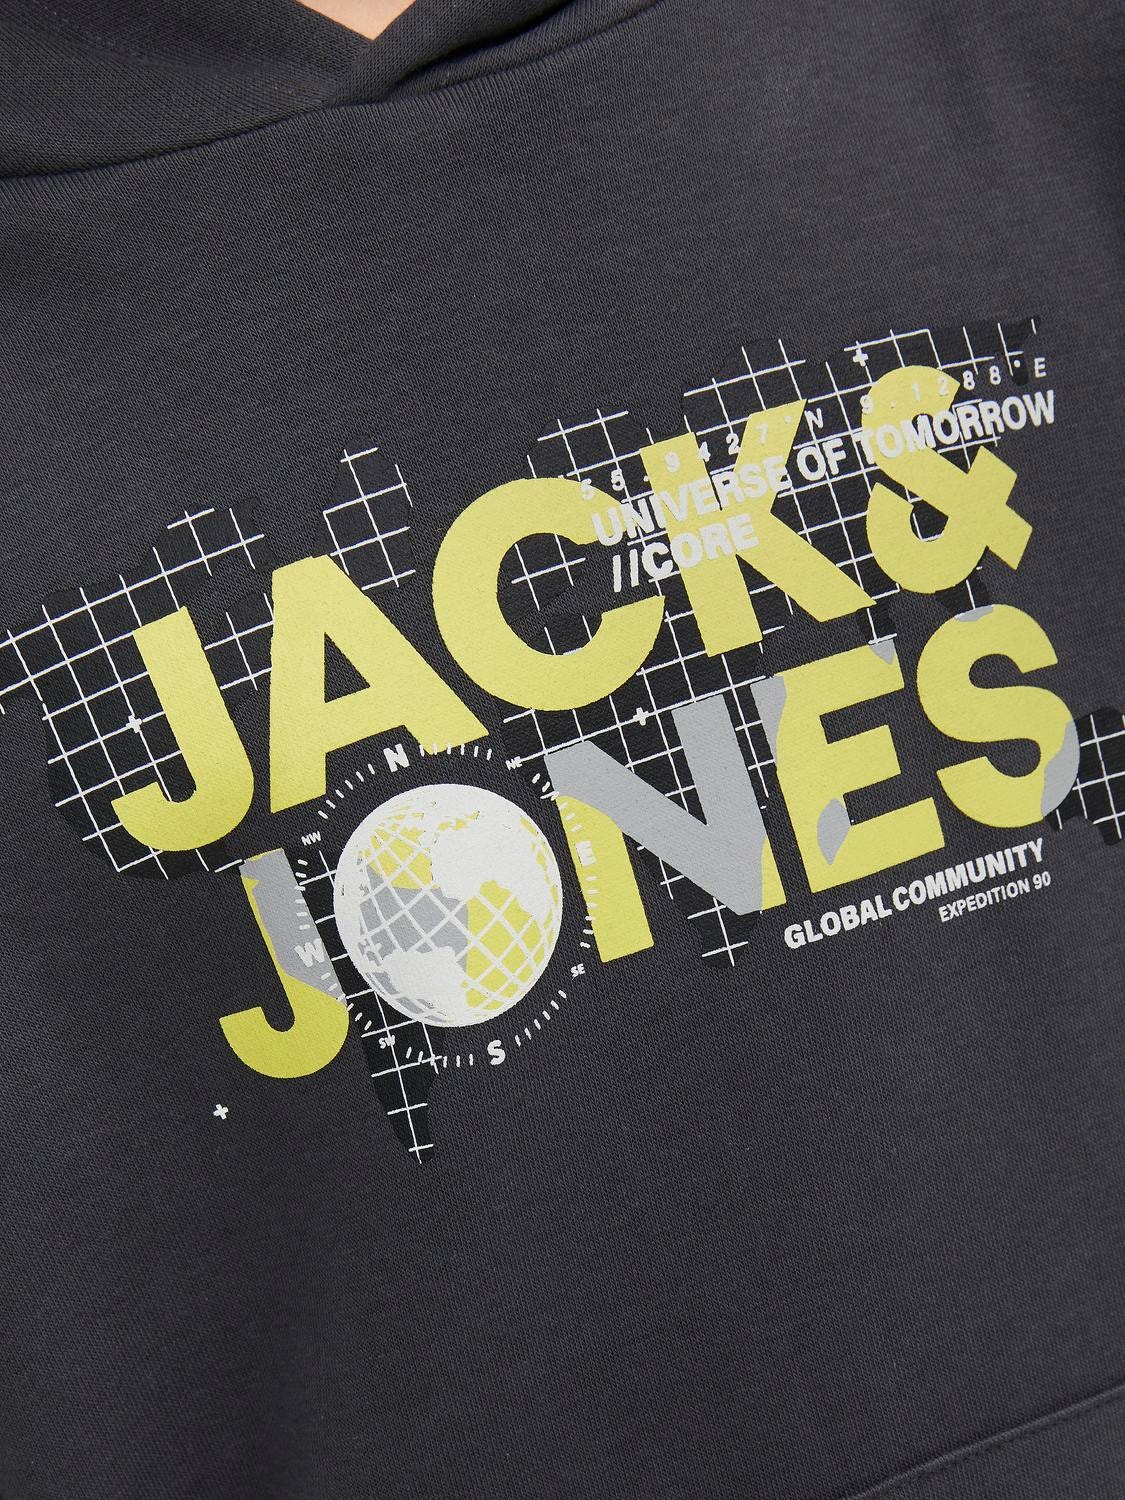 Jack & Jones Logo Hoodie For boys -Asphalt - 12241029